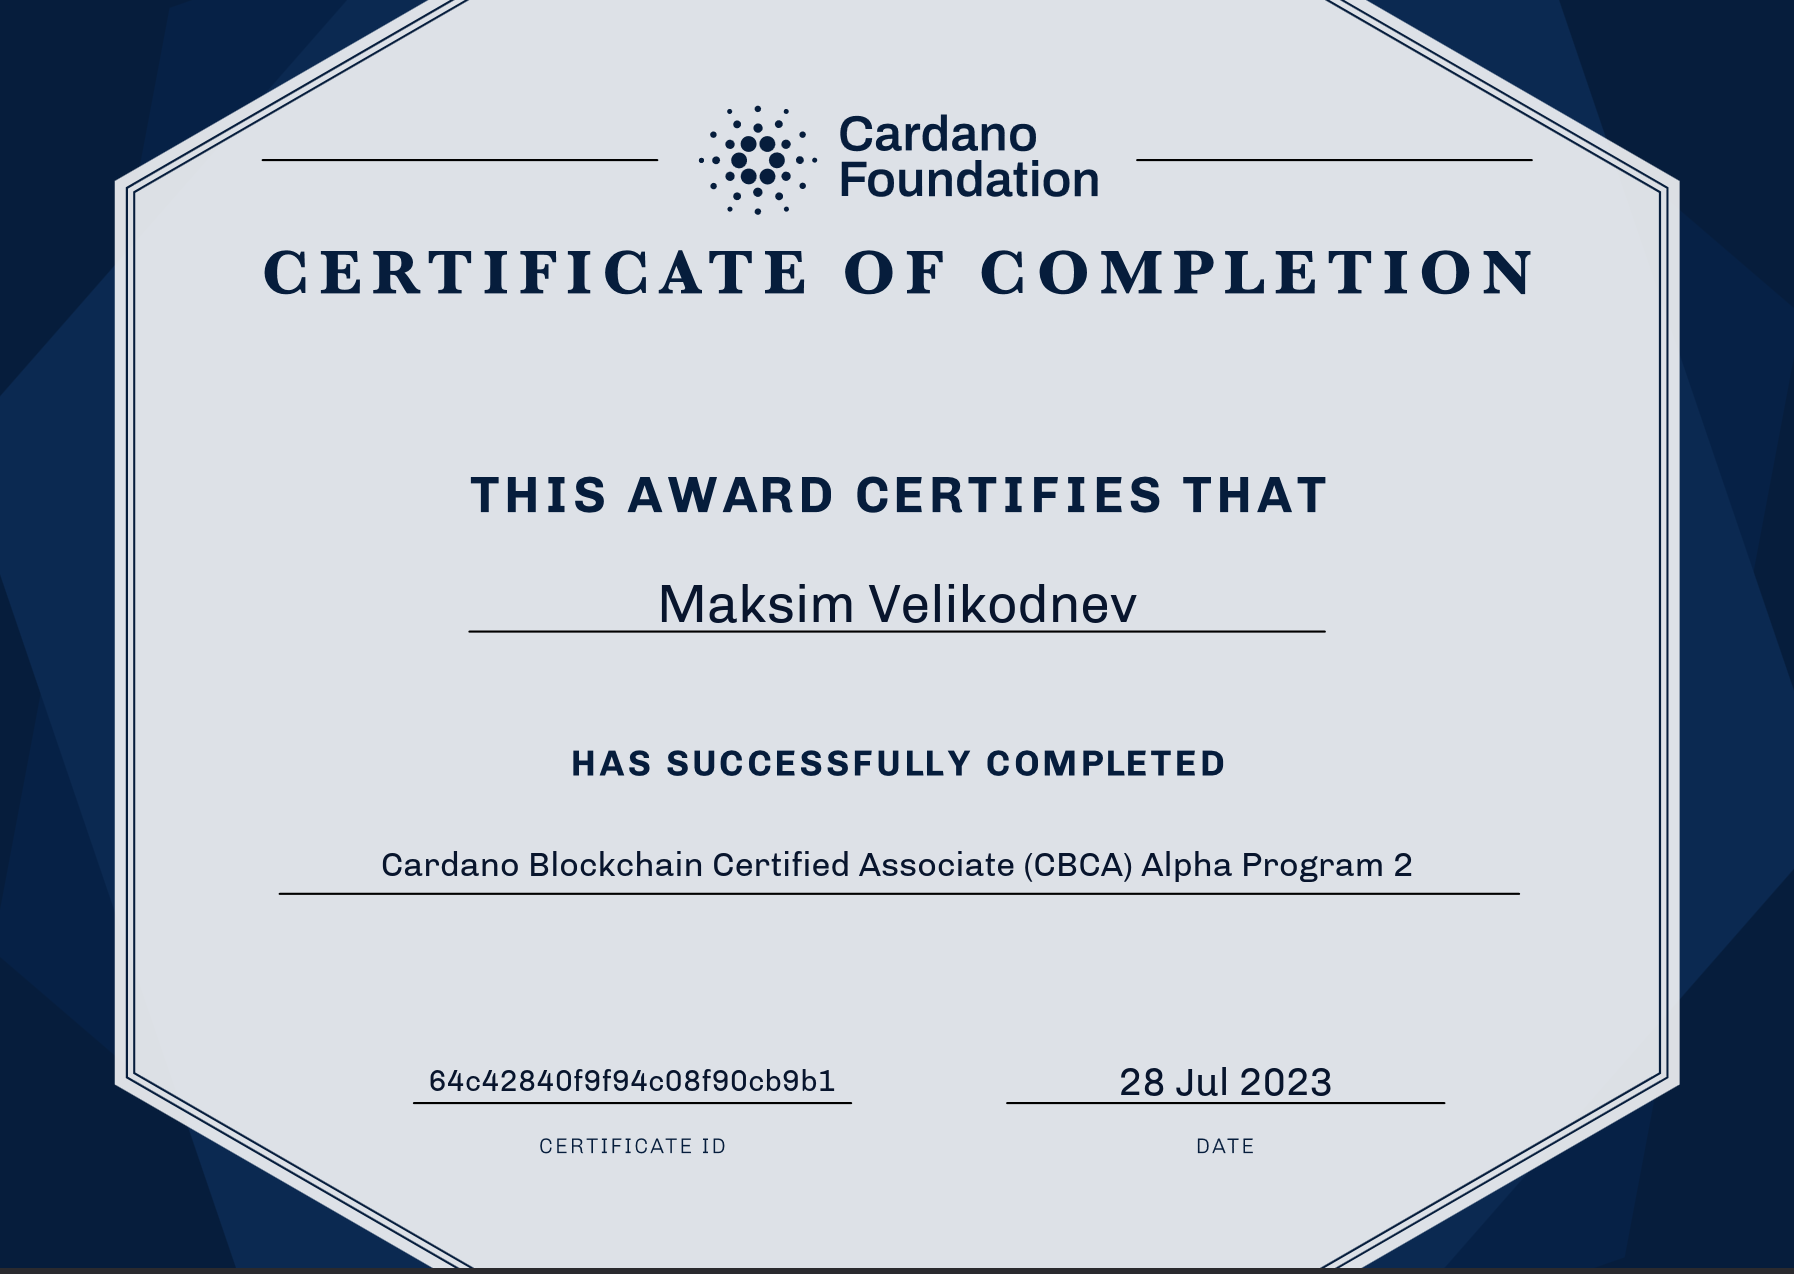 Maksim Completes Cardano Blockchain Certified Associate (CBCA) Alpha Program